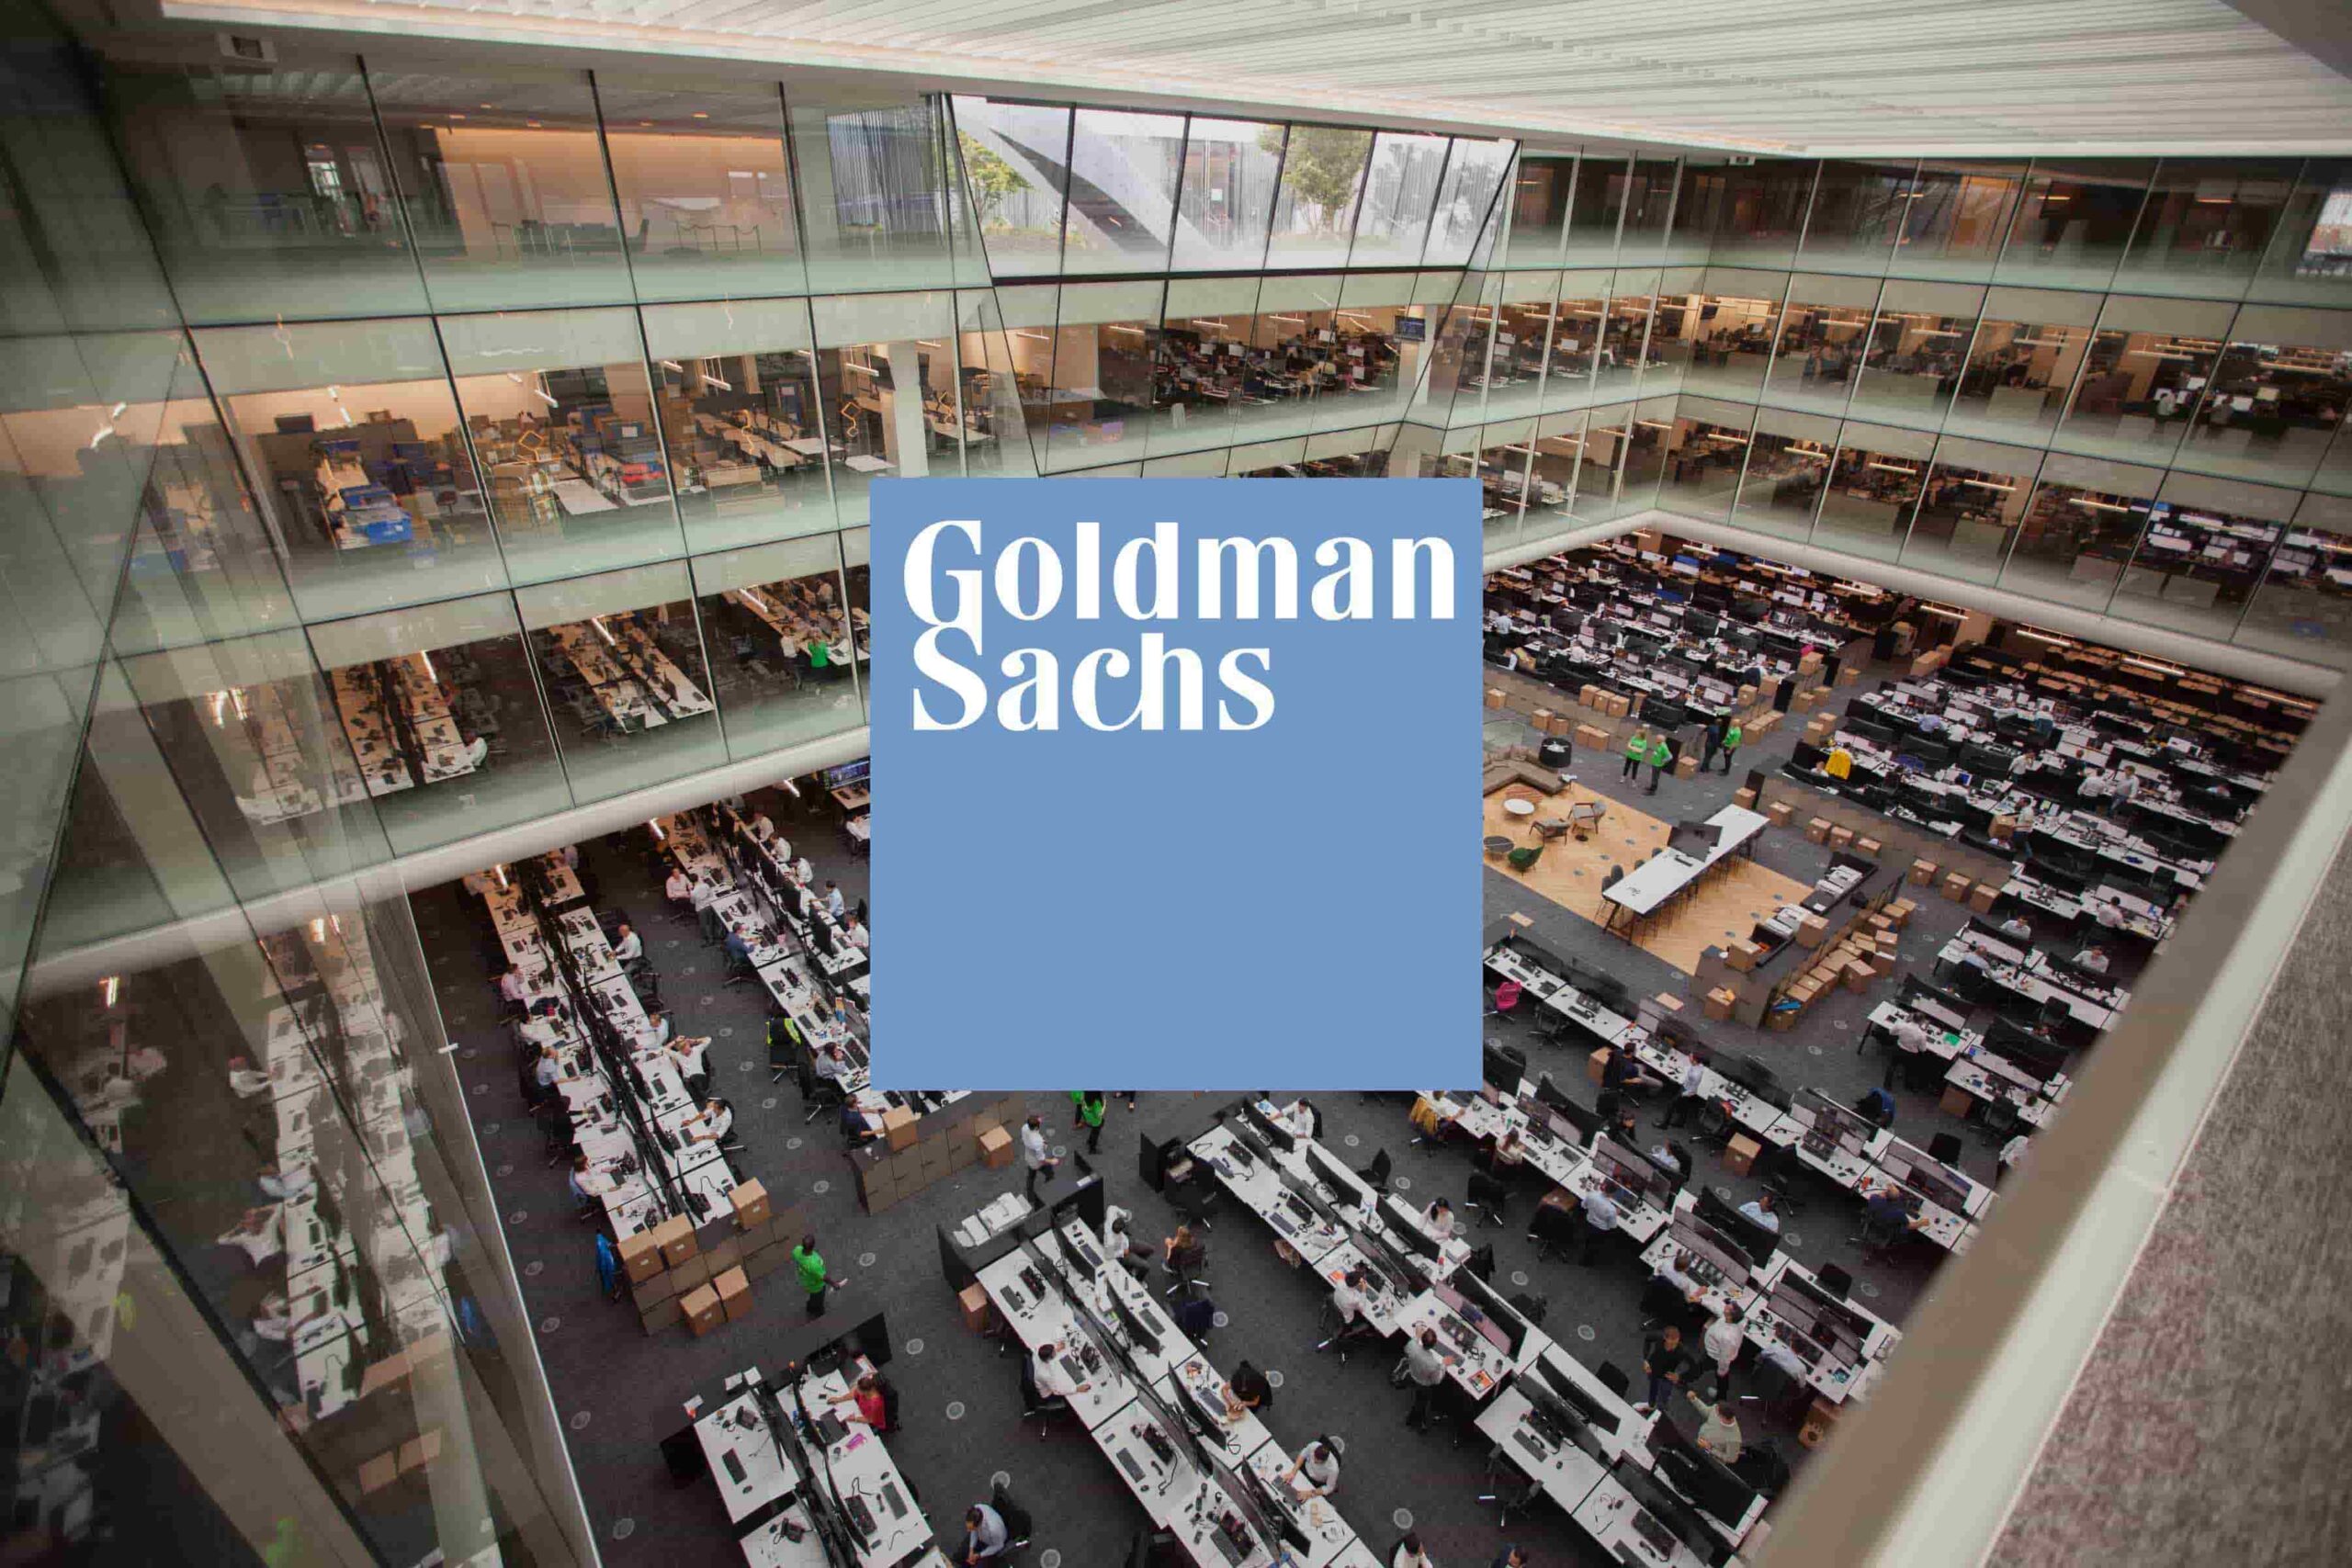 ESG Debt Market Sees Goldman Sachs' Return with $700 Million Deal